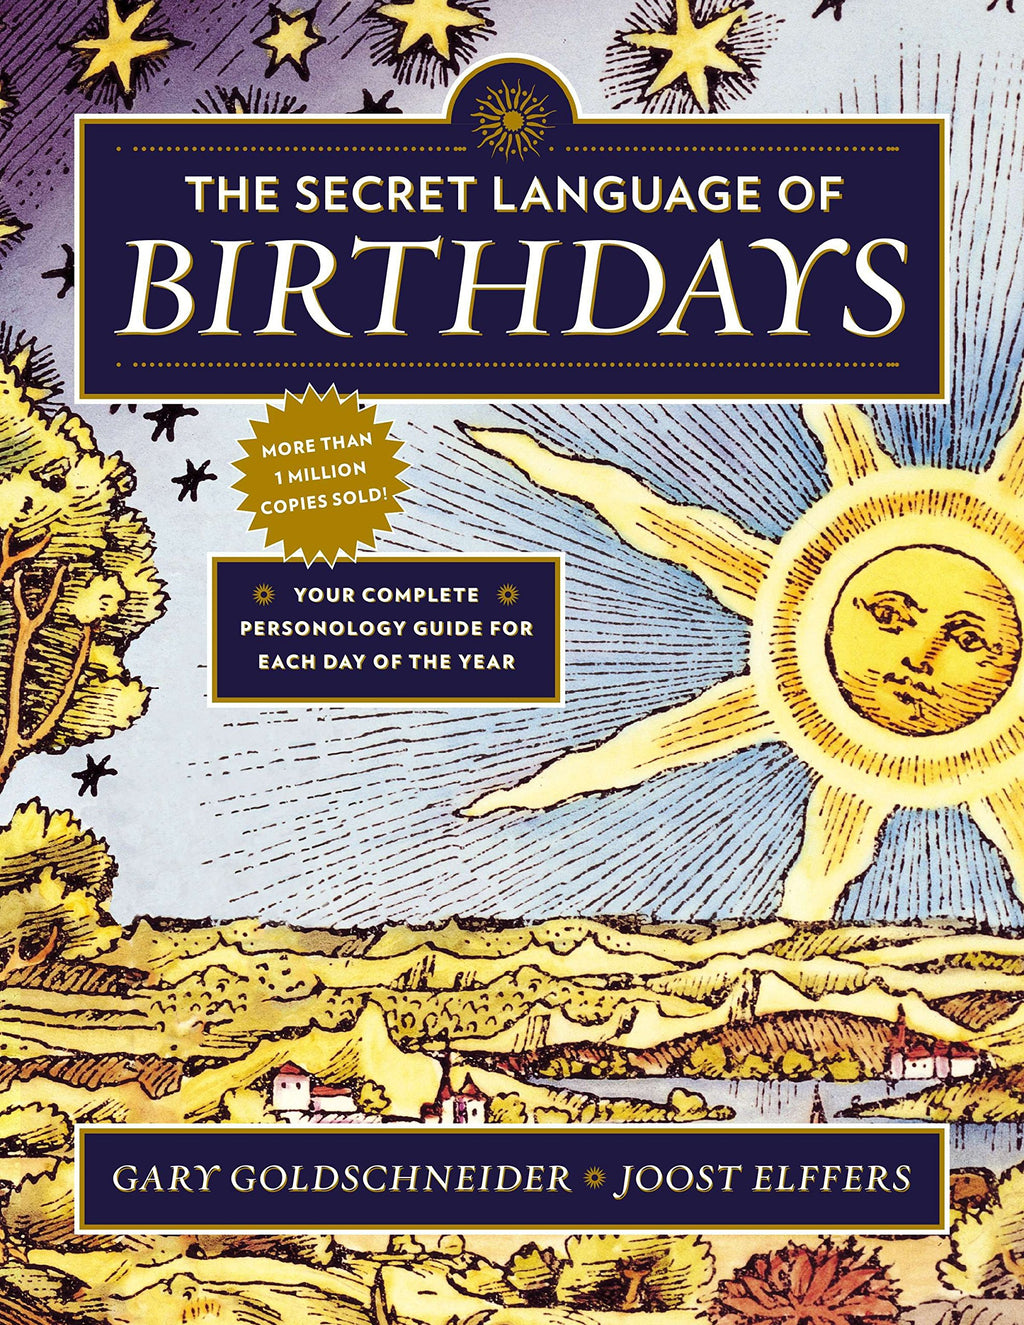 The Secret Language of Birthdays by Gary Goldschneider & Joost Elffers